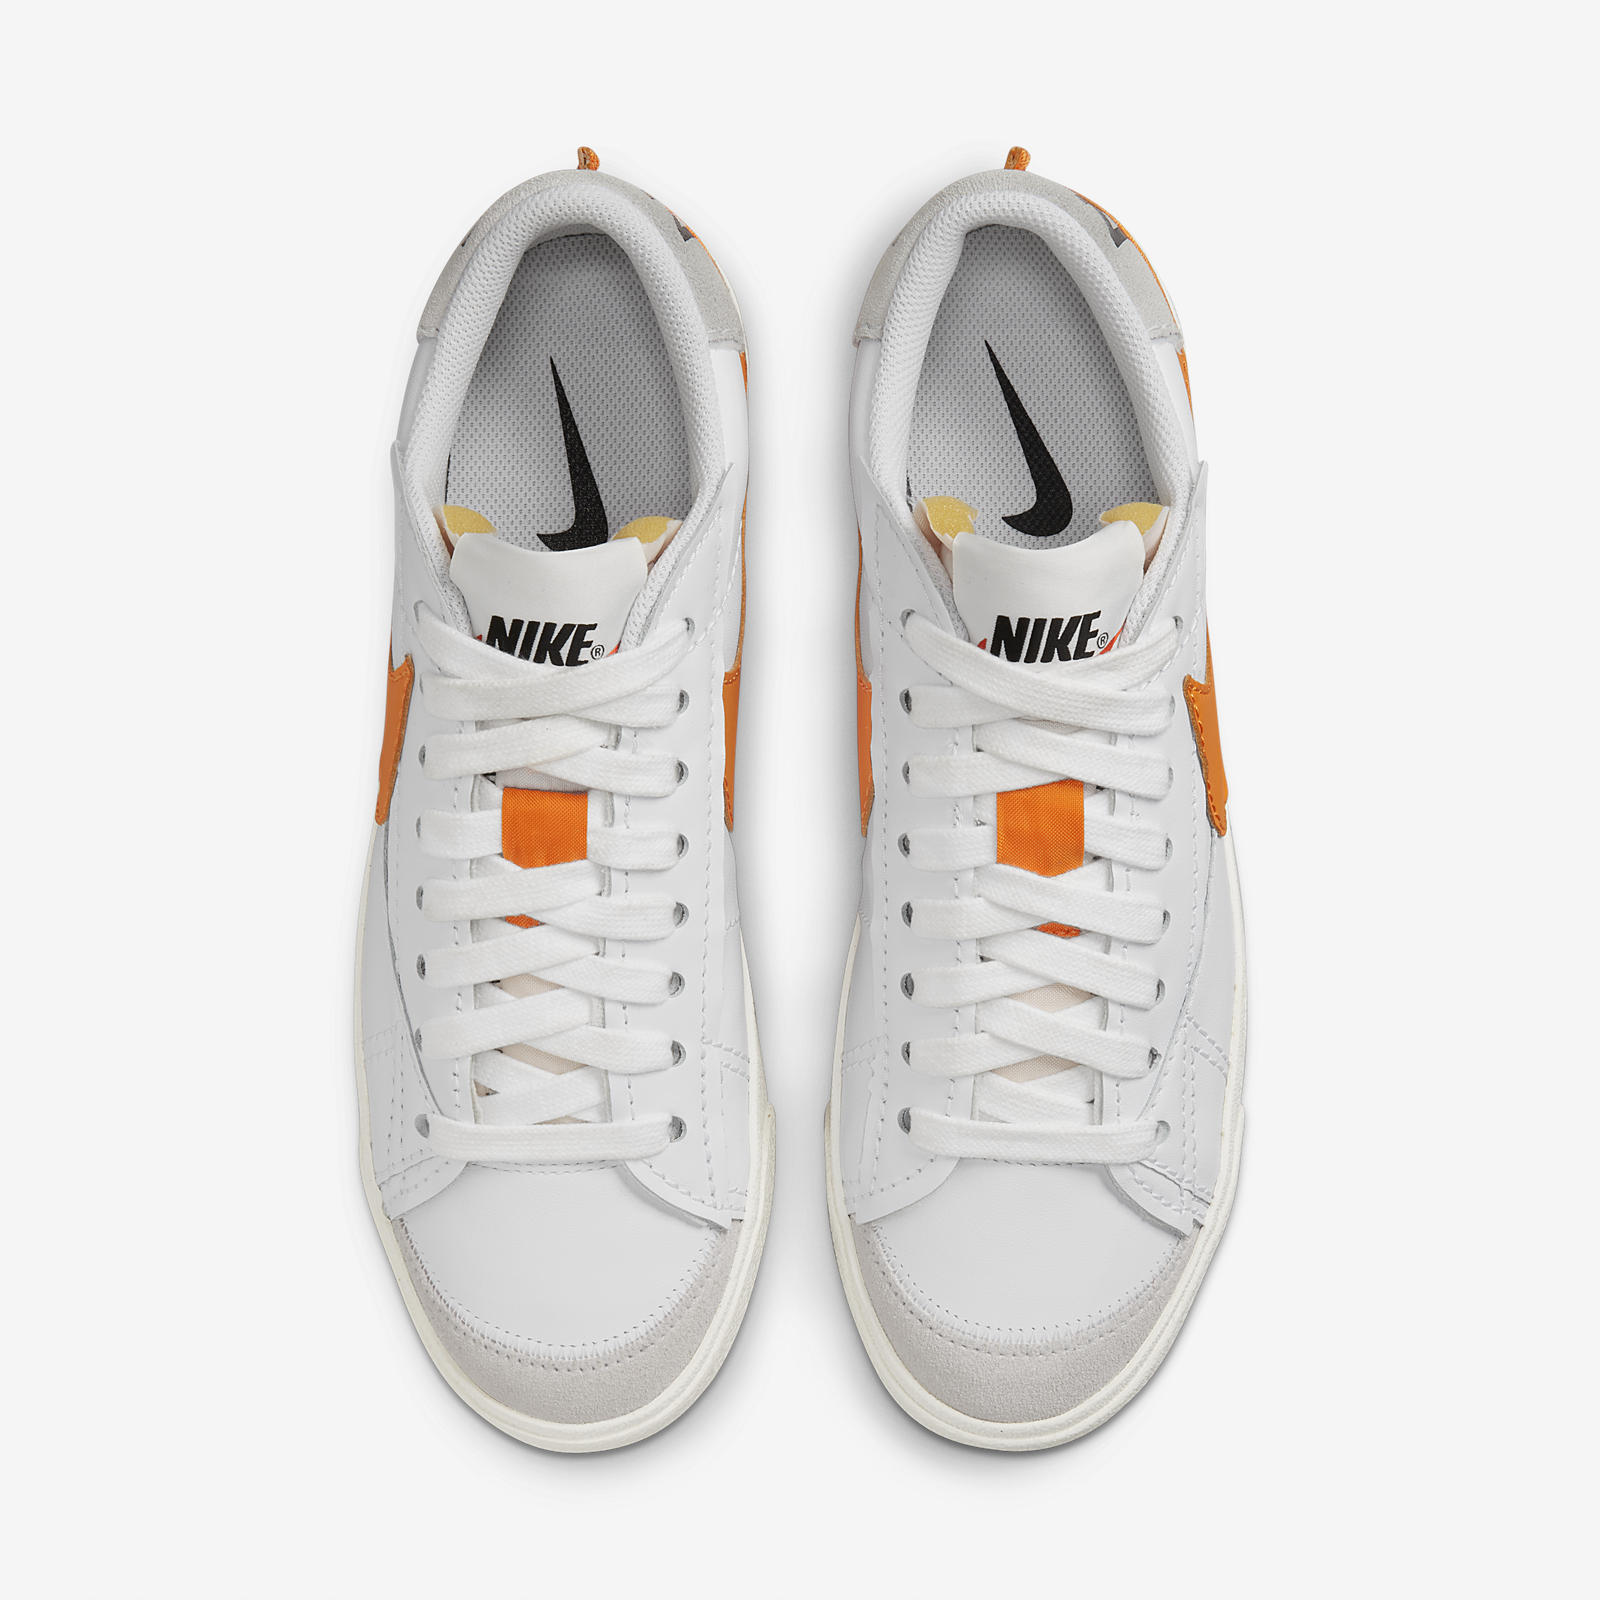 Nike Blazer Low Jumbo
Orange / White